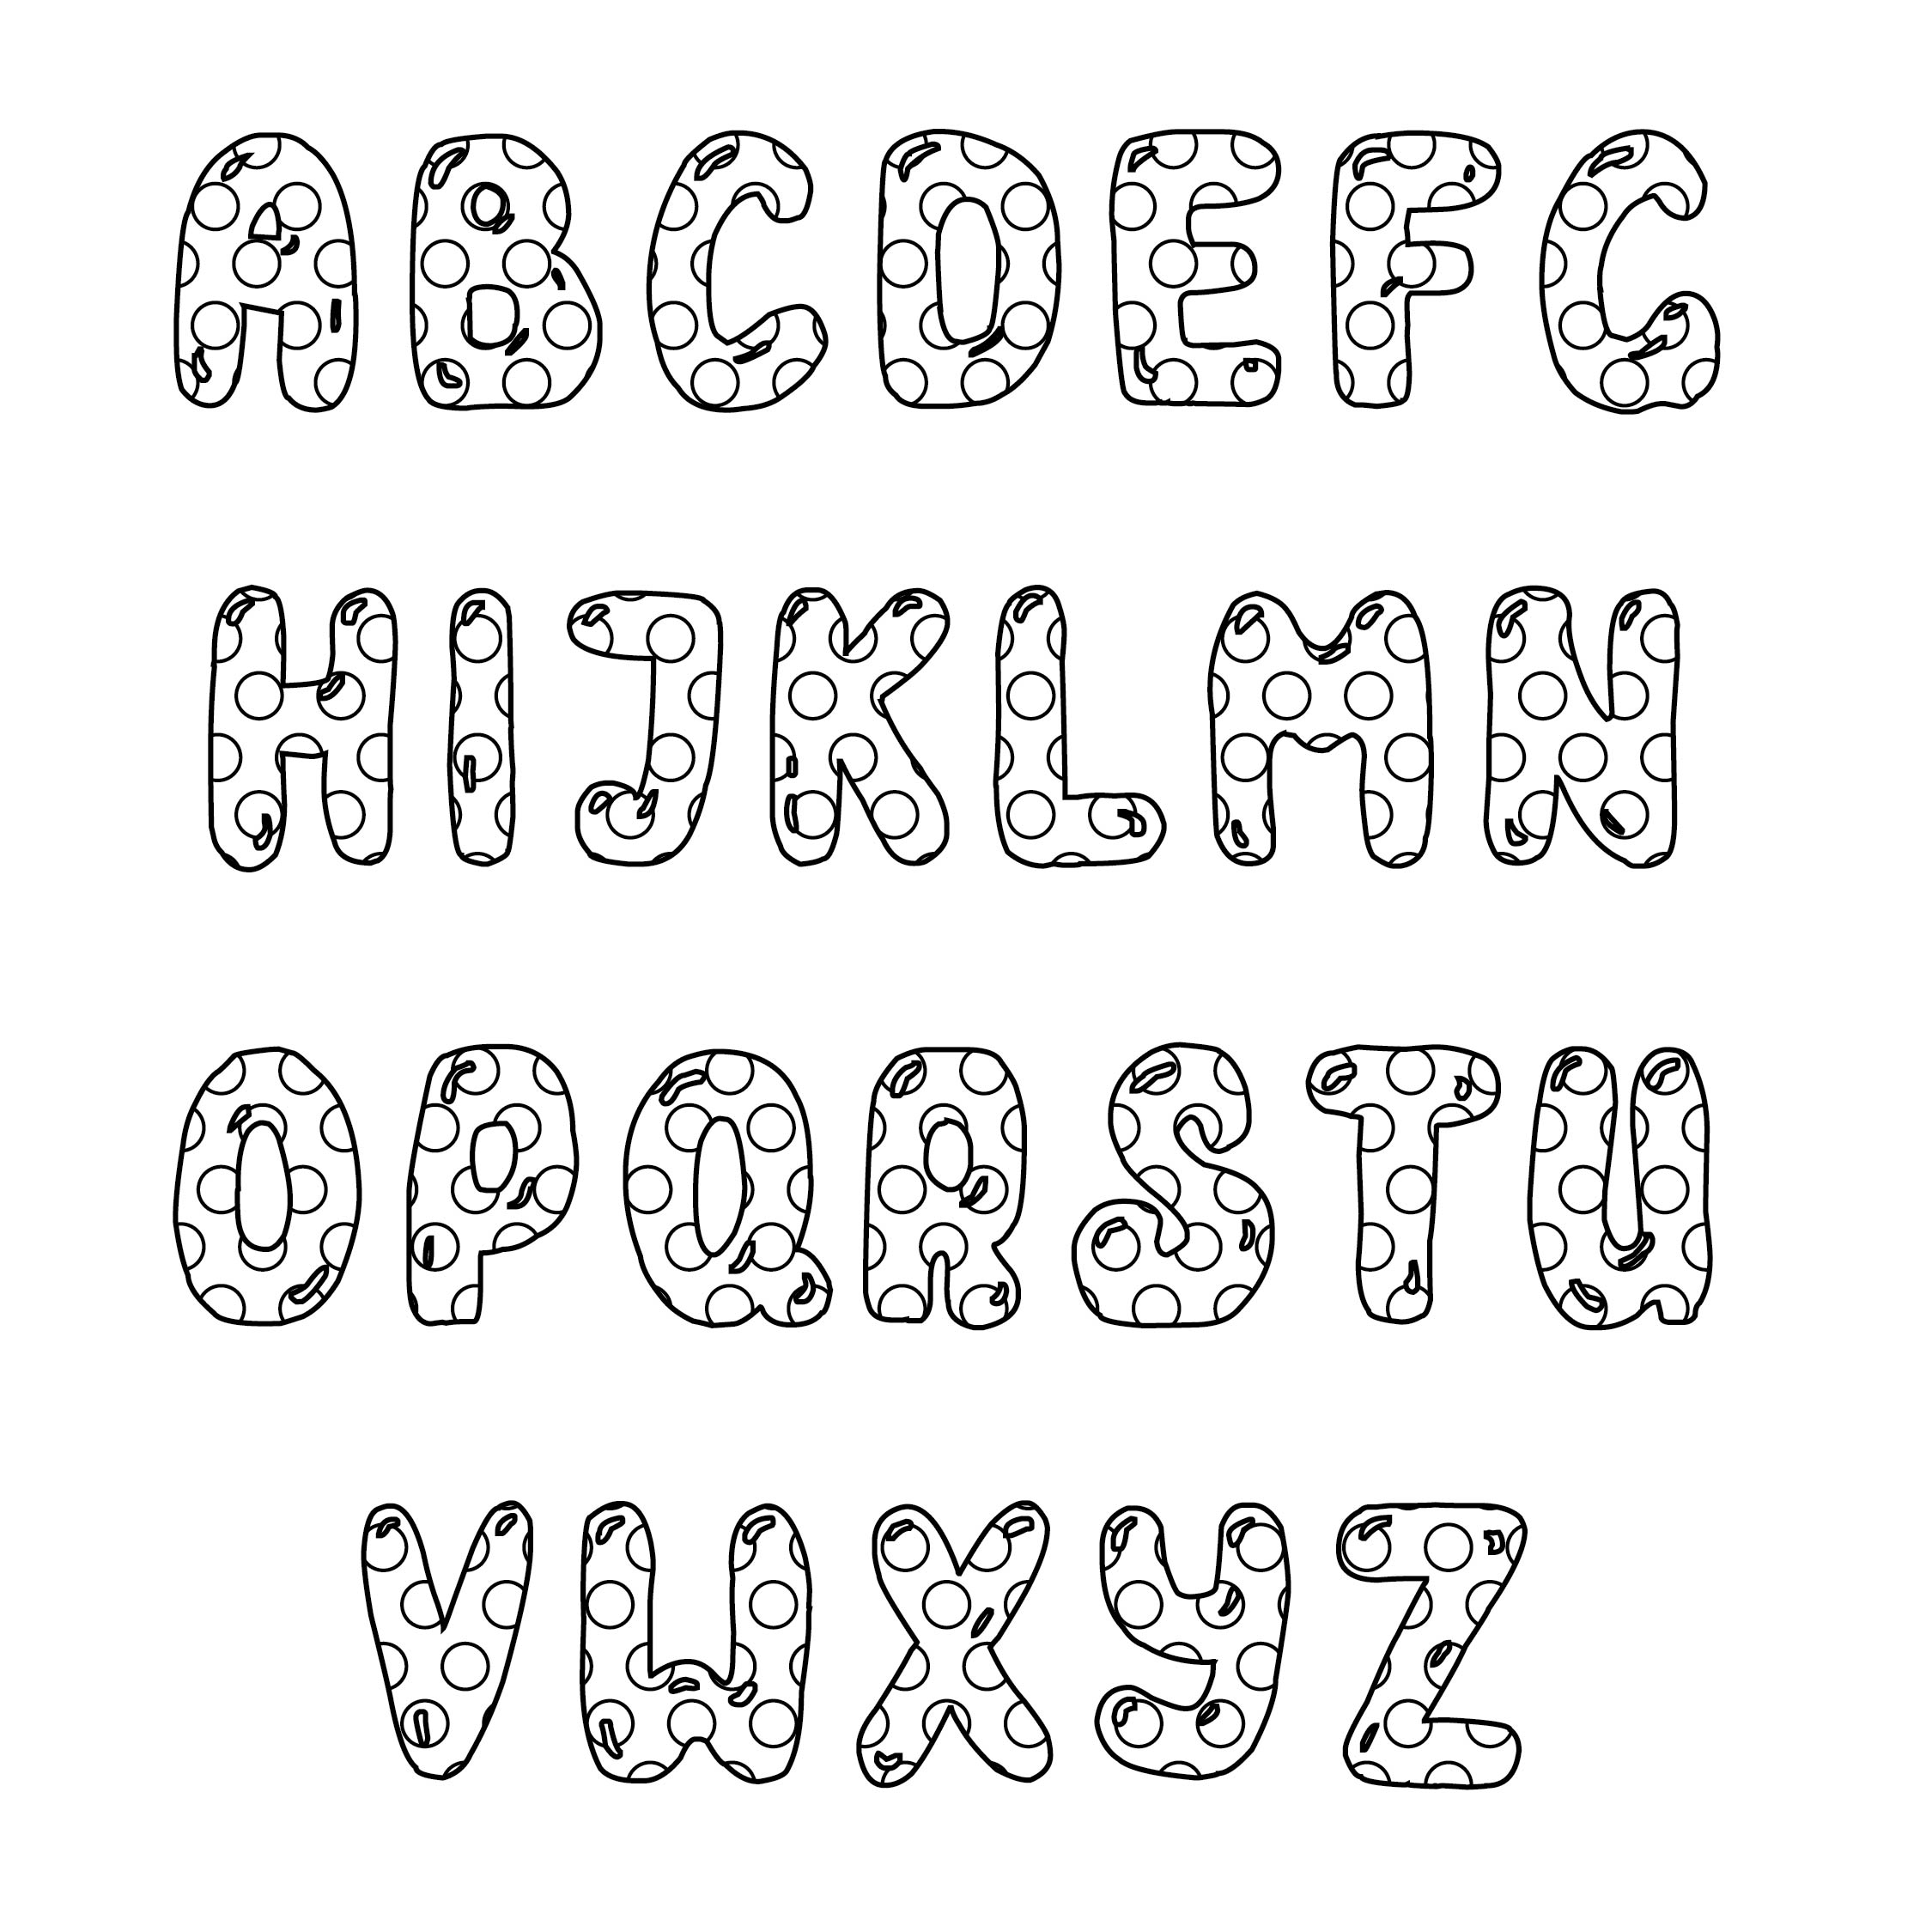 9 Best Images of Polka Dot Printable Alphabet Letters - Bubble Letter D